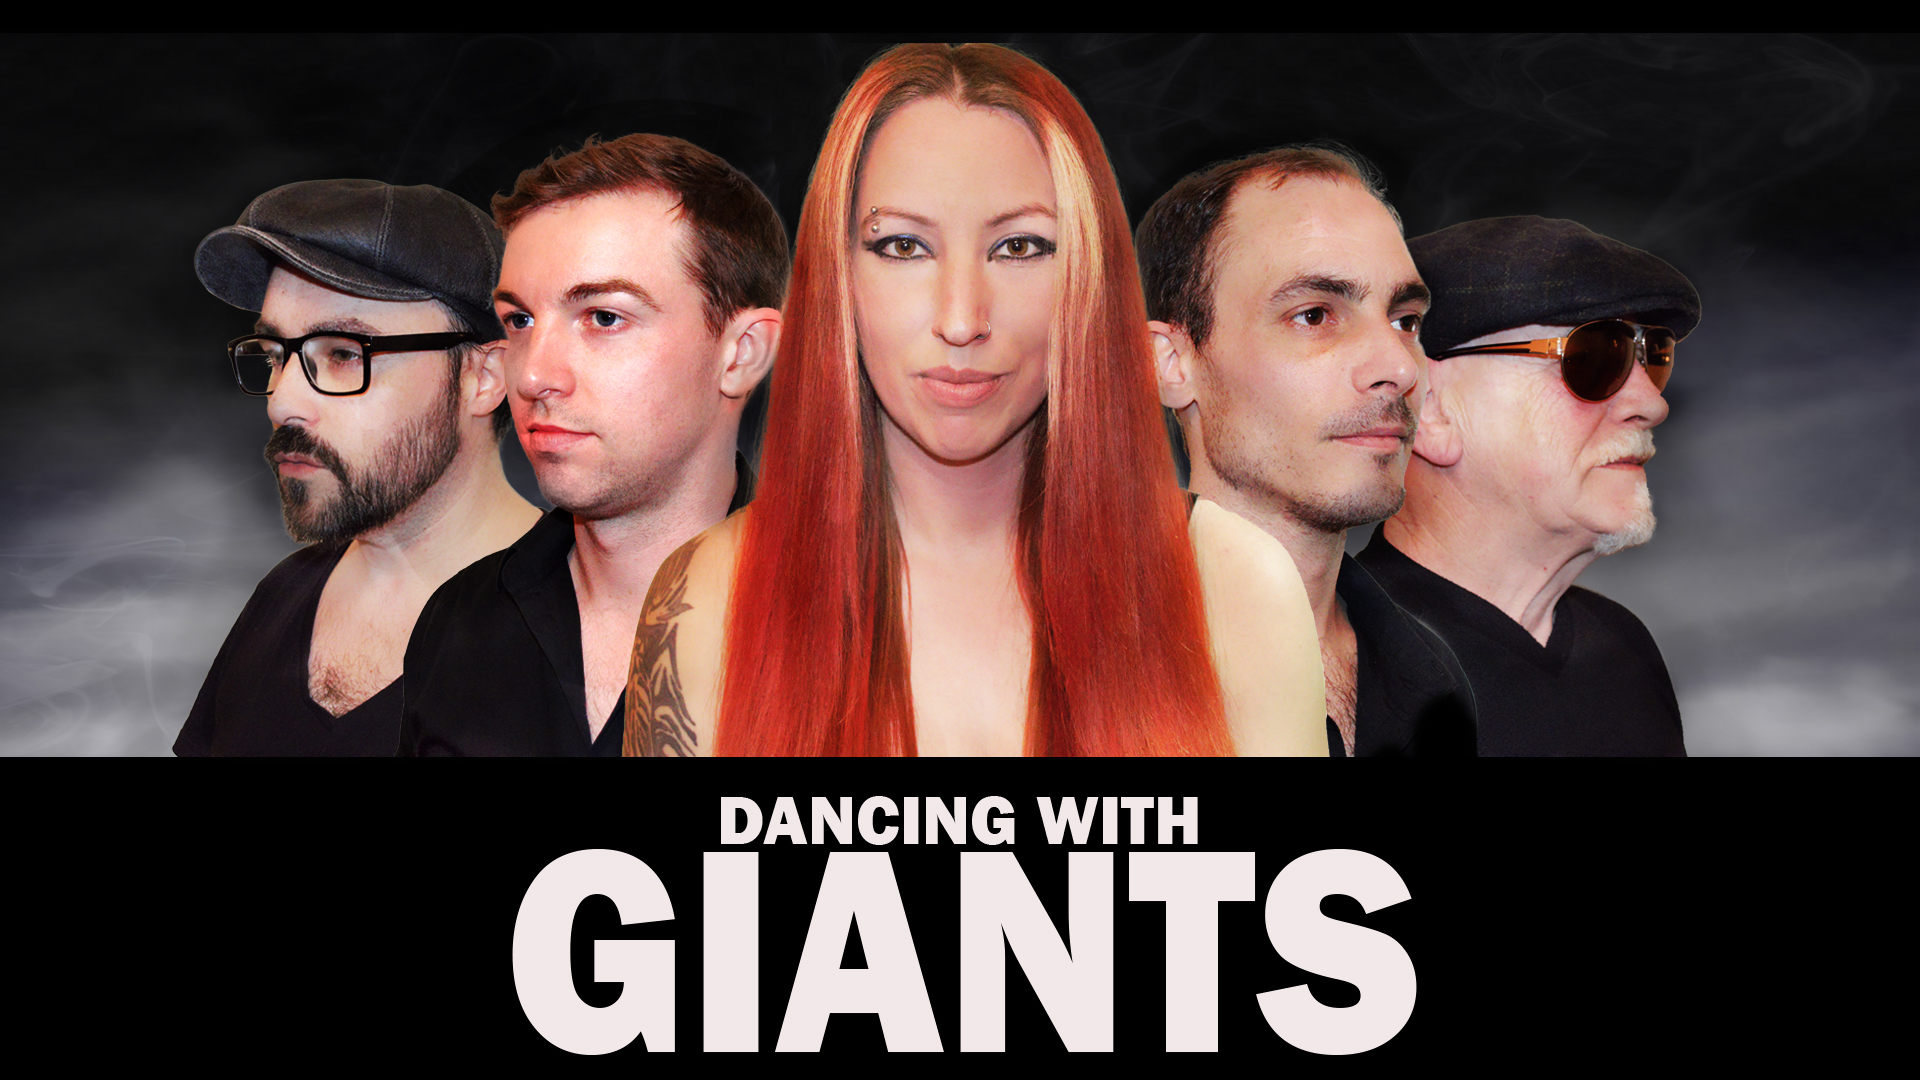 Dancing With Giants